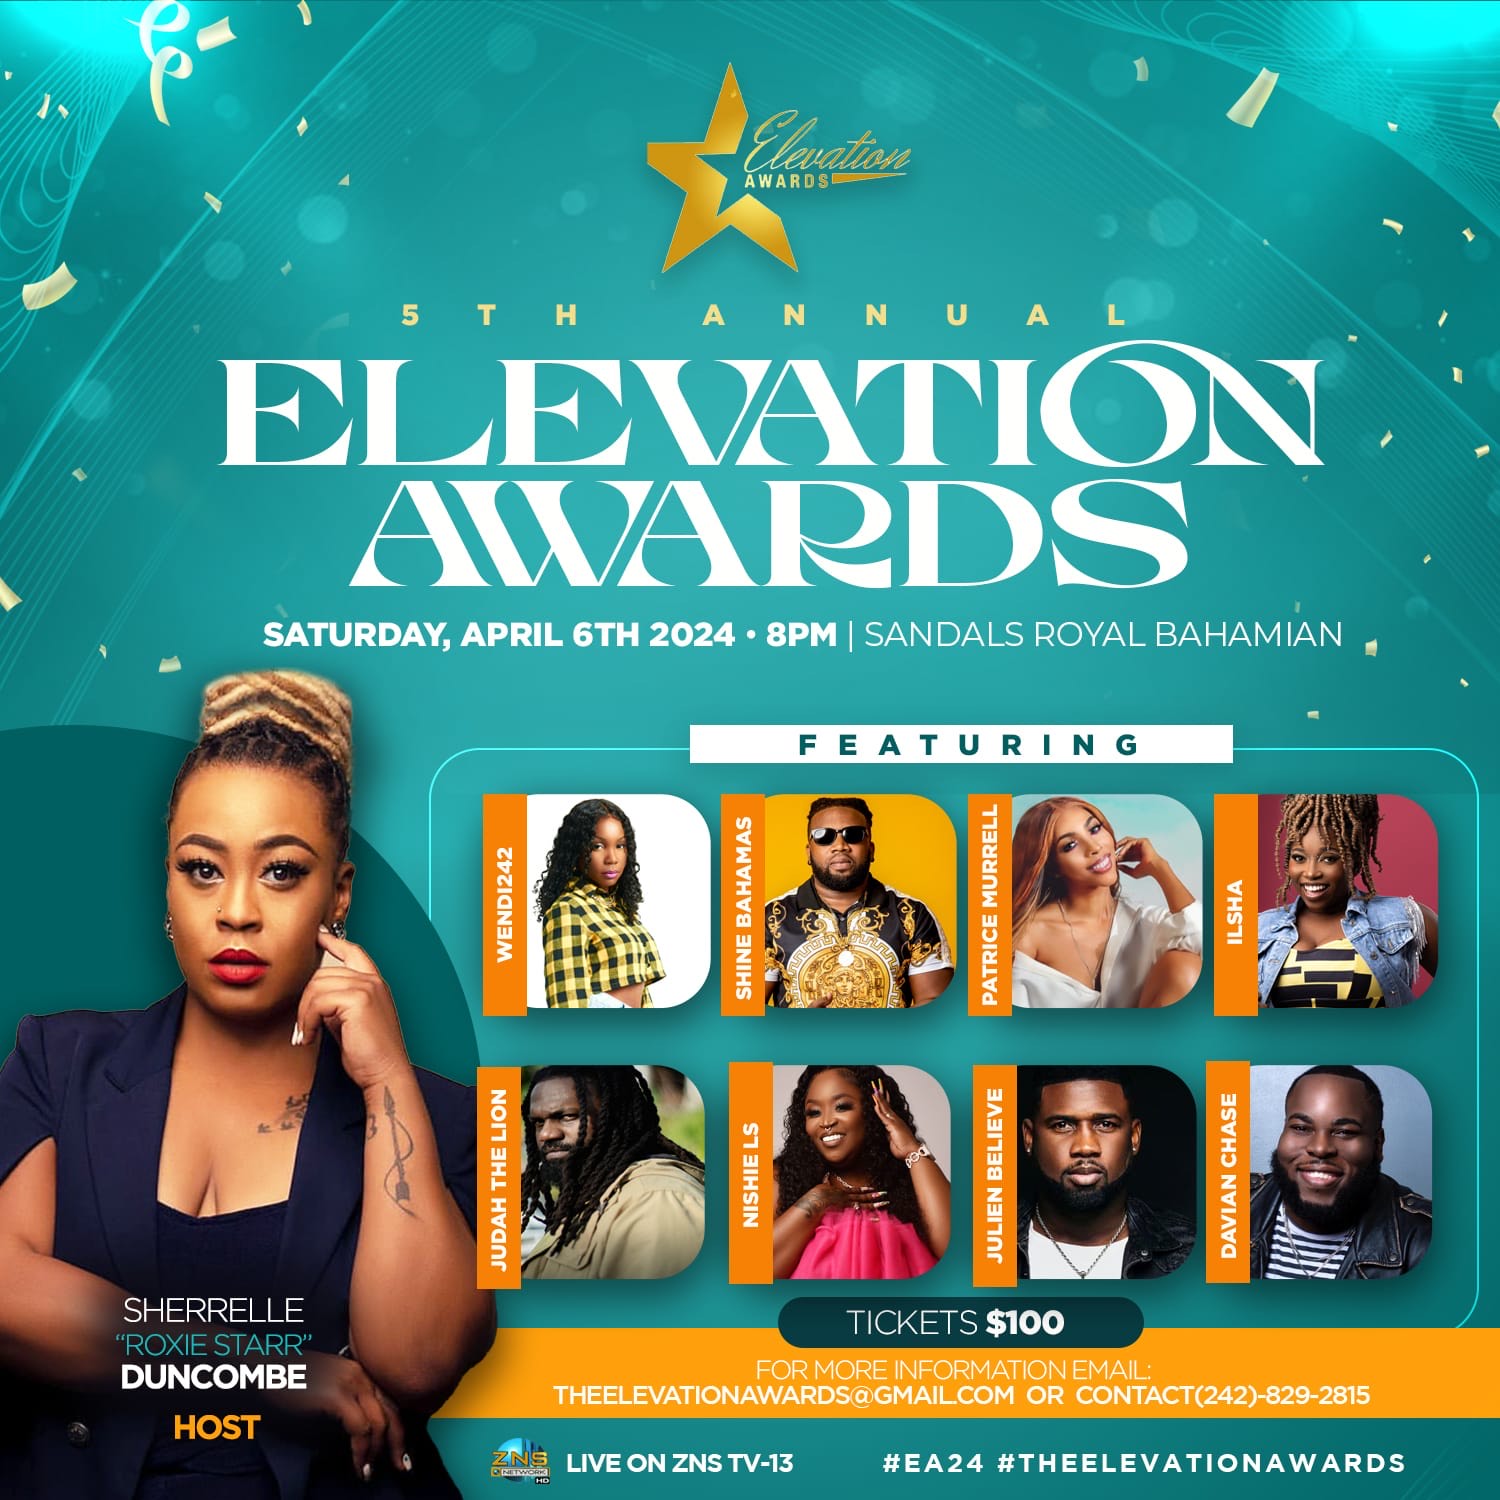 The Elevation Awards